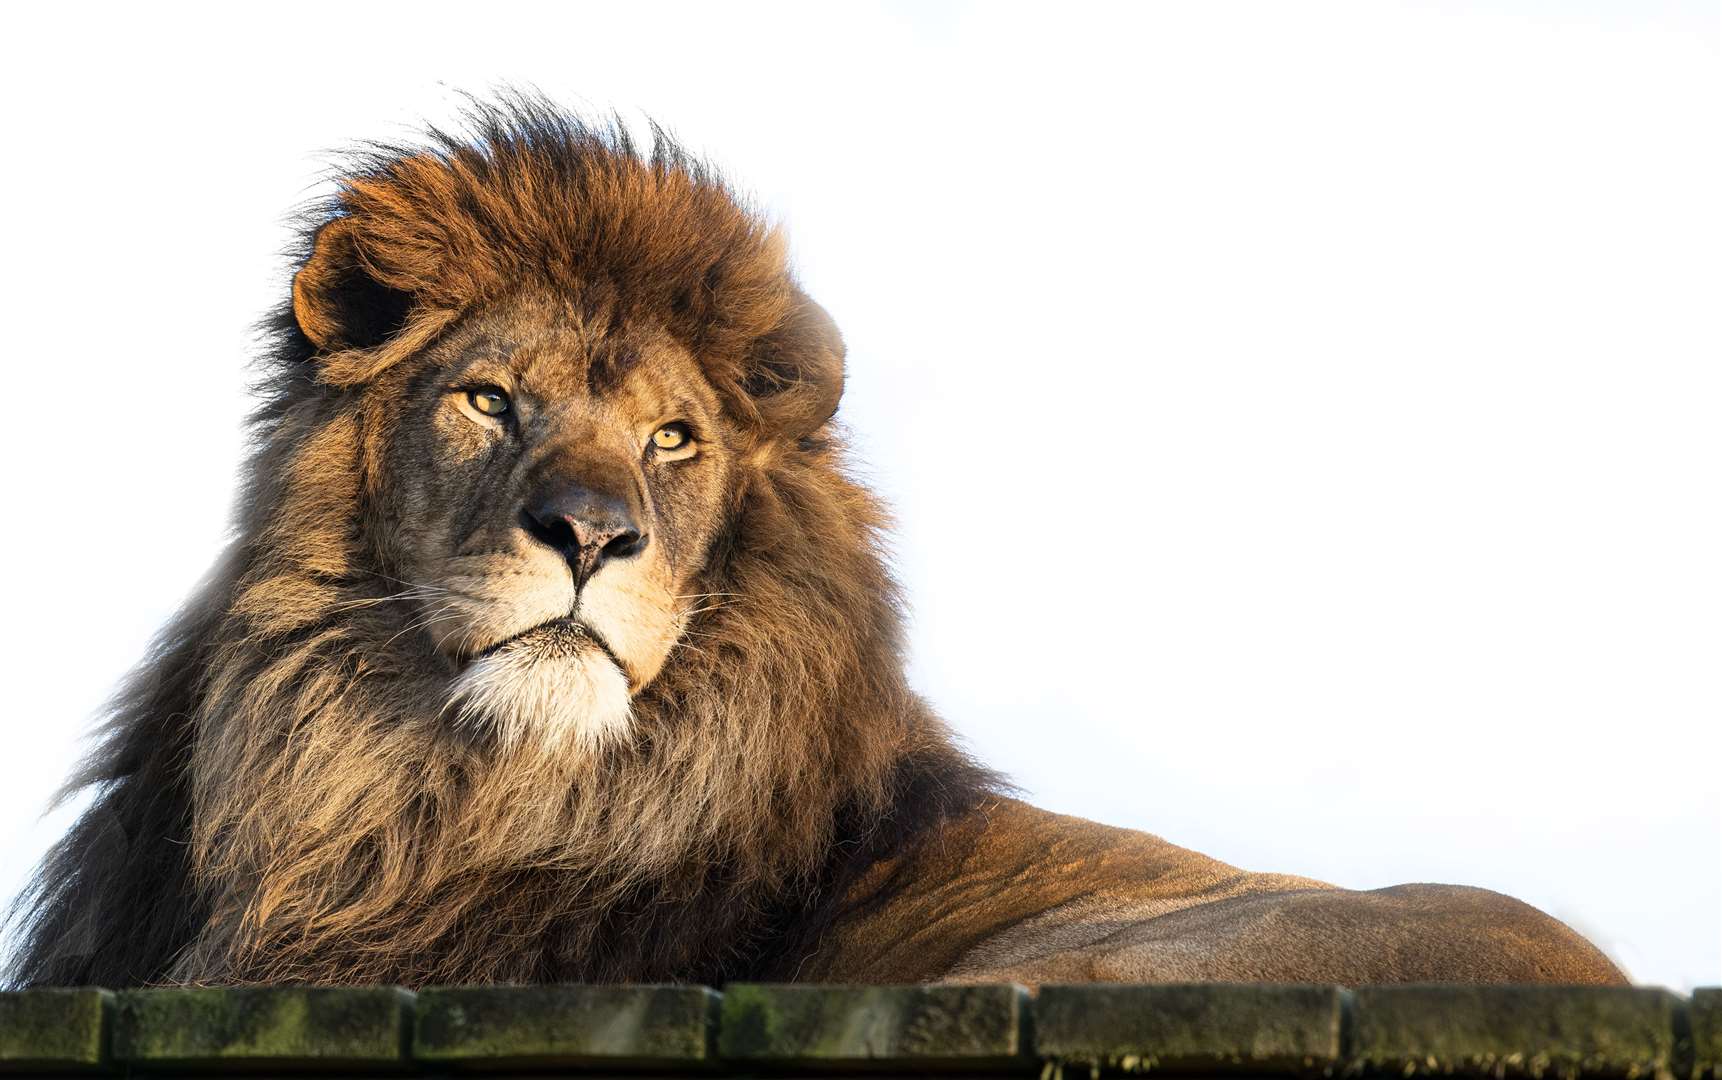 Kasanga the lion at the Big Cat Sanctuary Picture: Alma Leaper